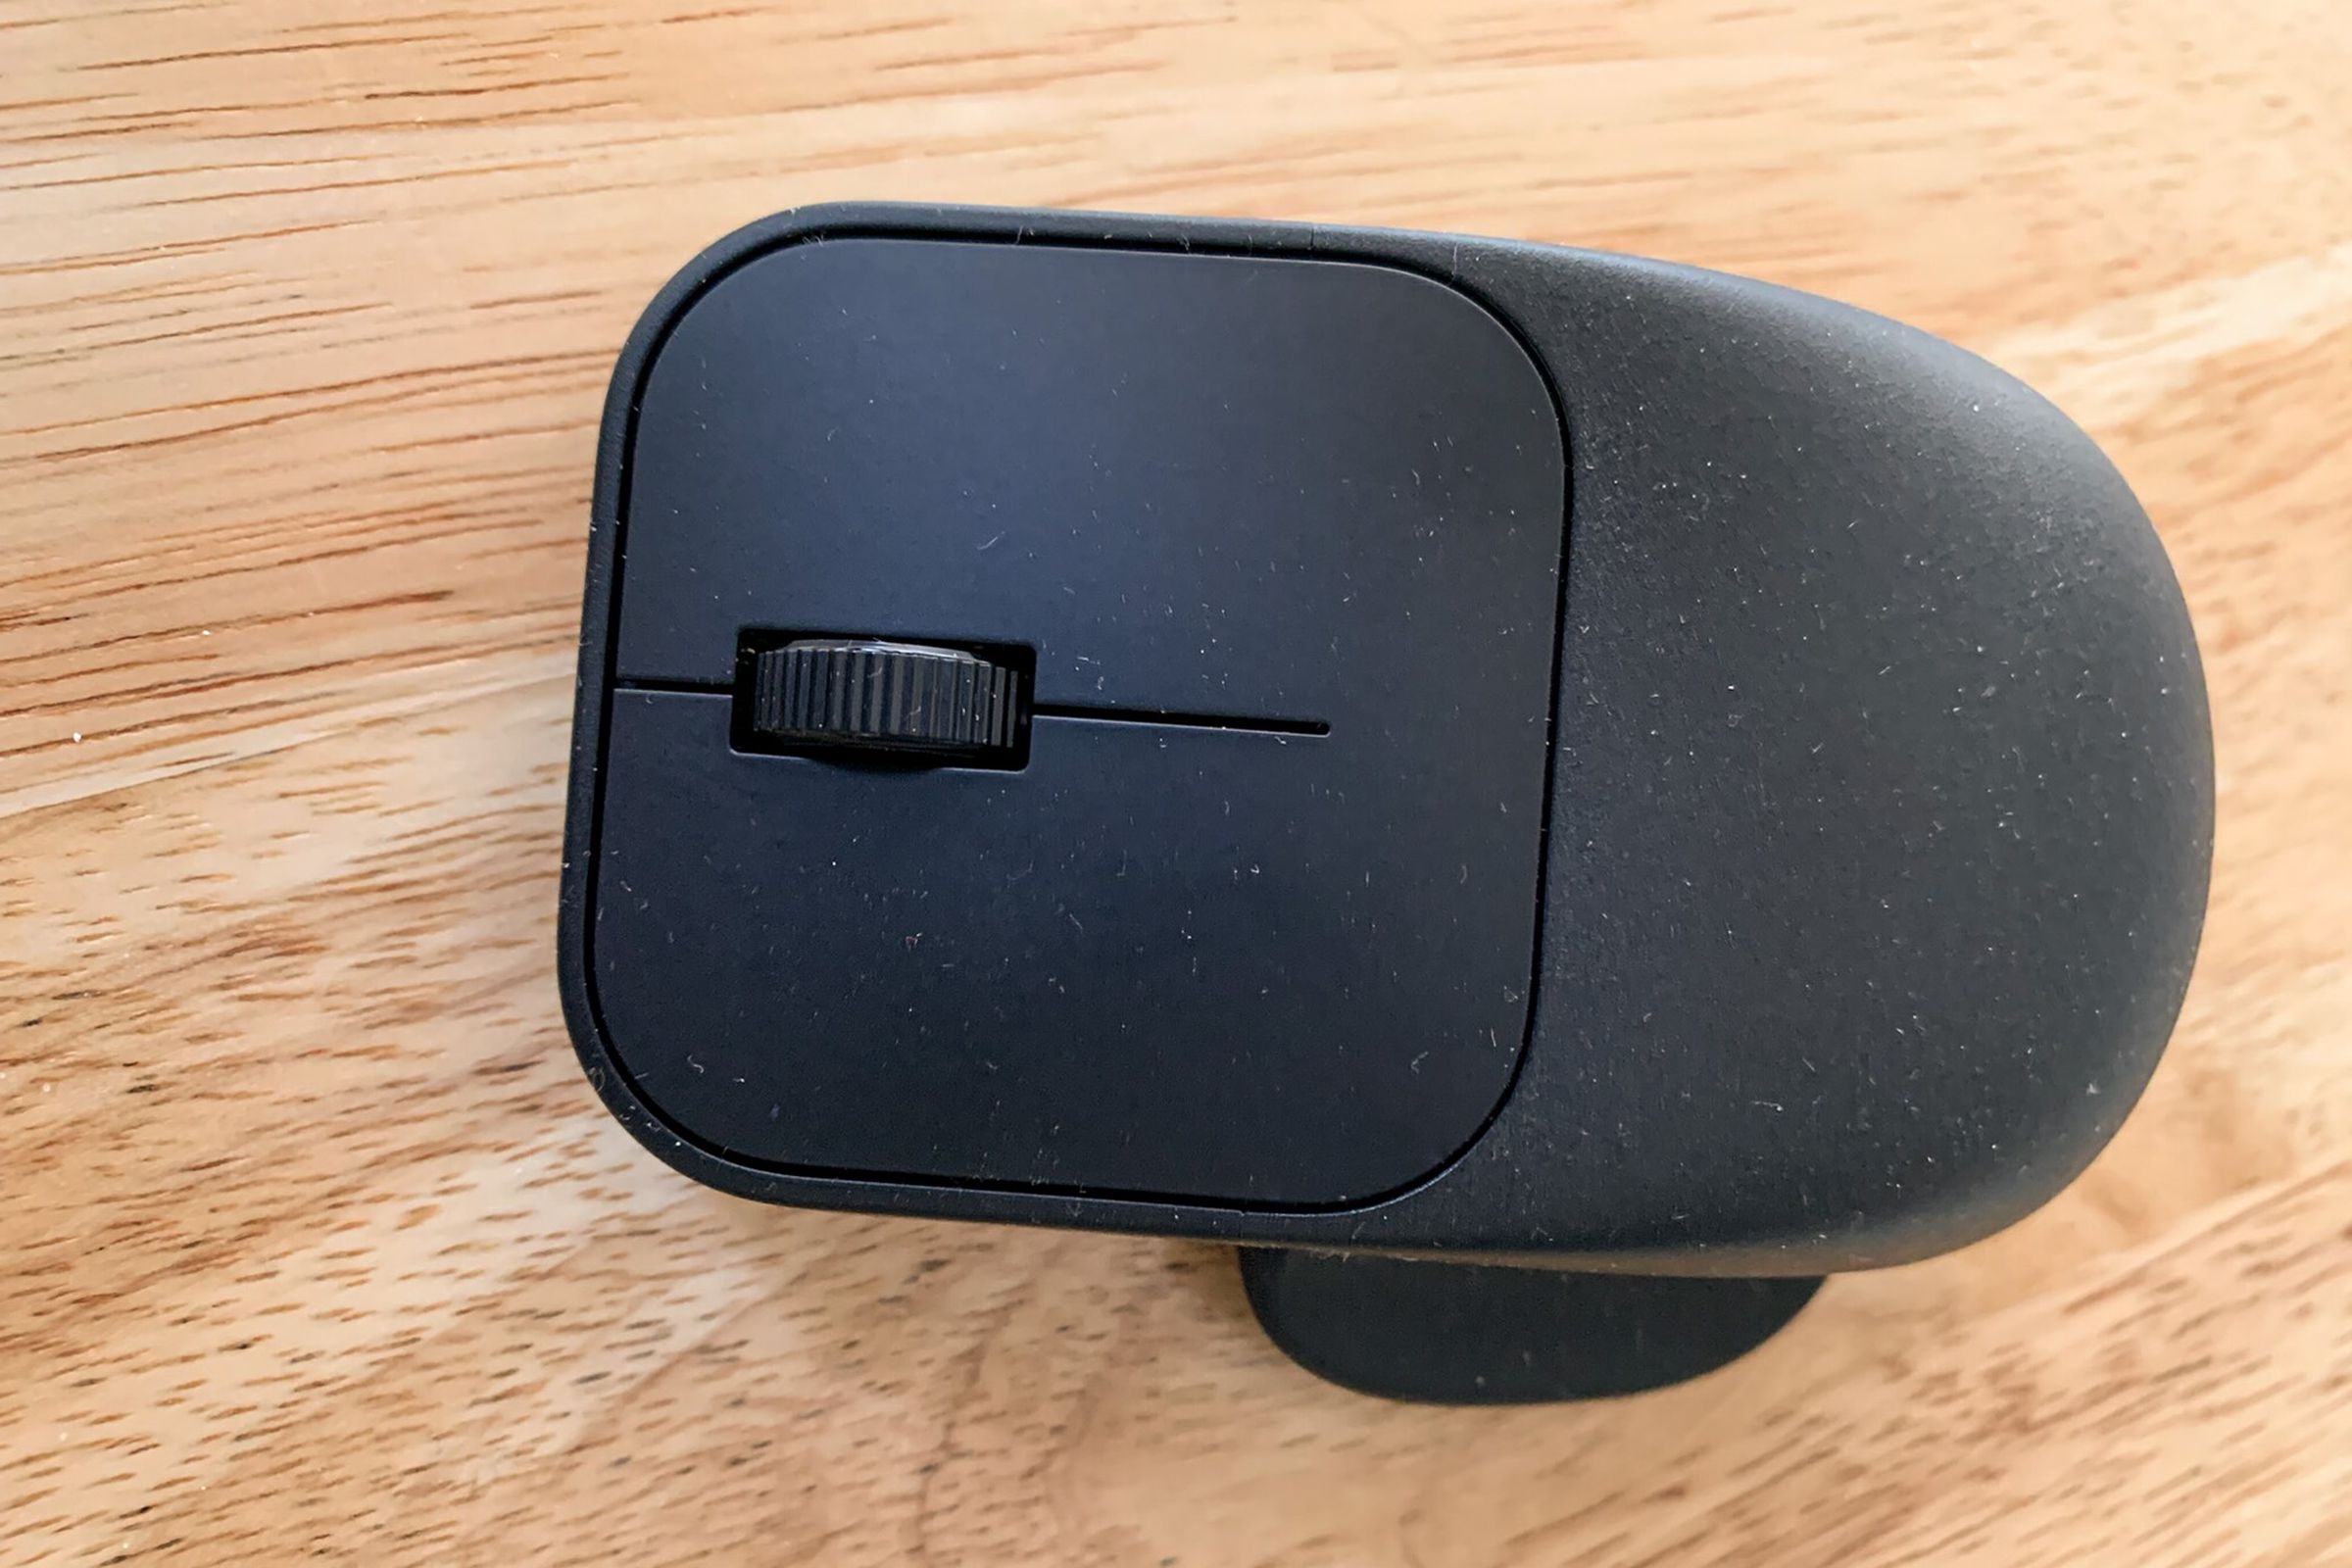 Close-up of the Microsoft Adaptive Mouse.